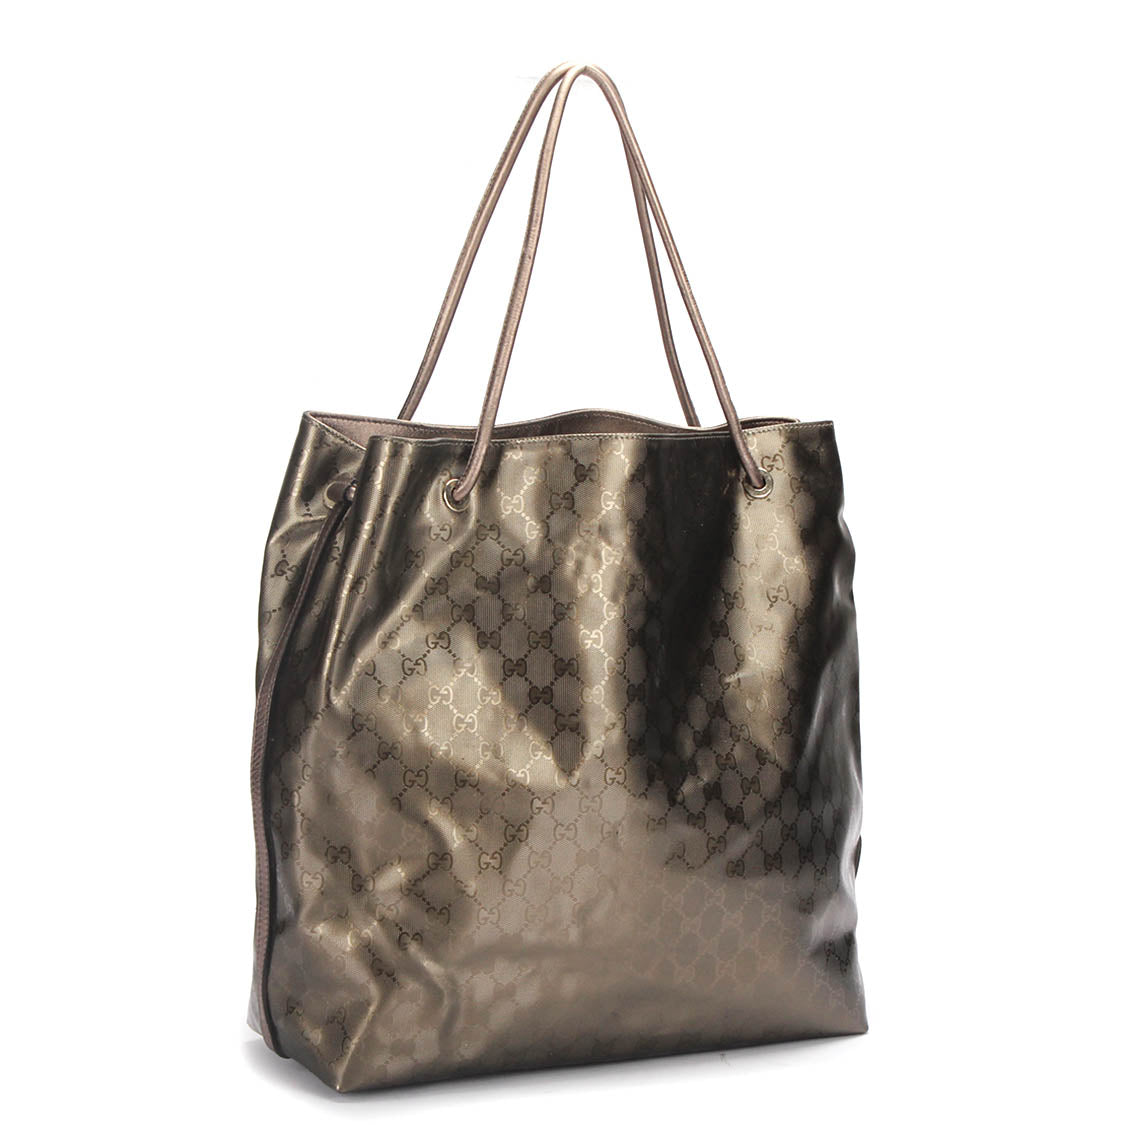 Gucci GG Imprime Gifford Tote Bag Canvas Tote Bag 257271 in Good condition